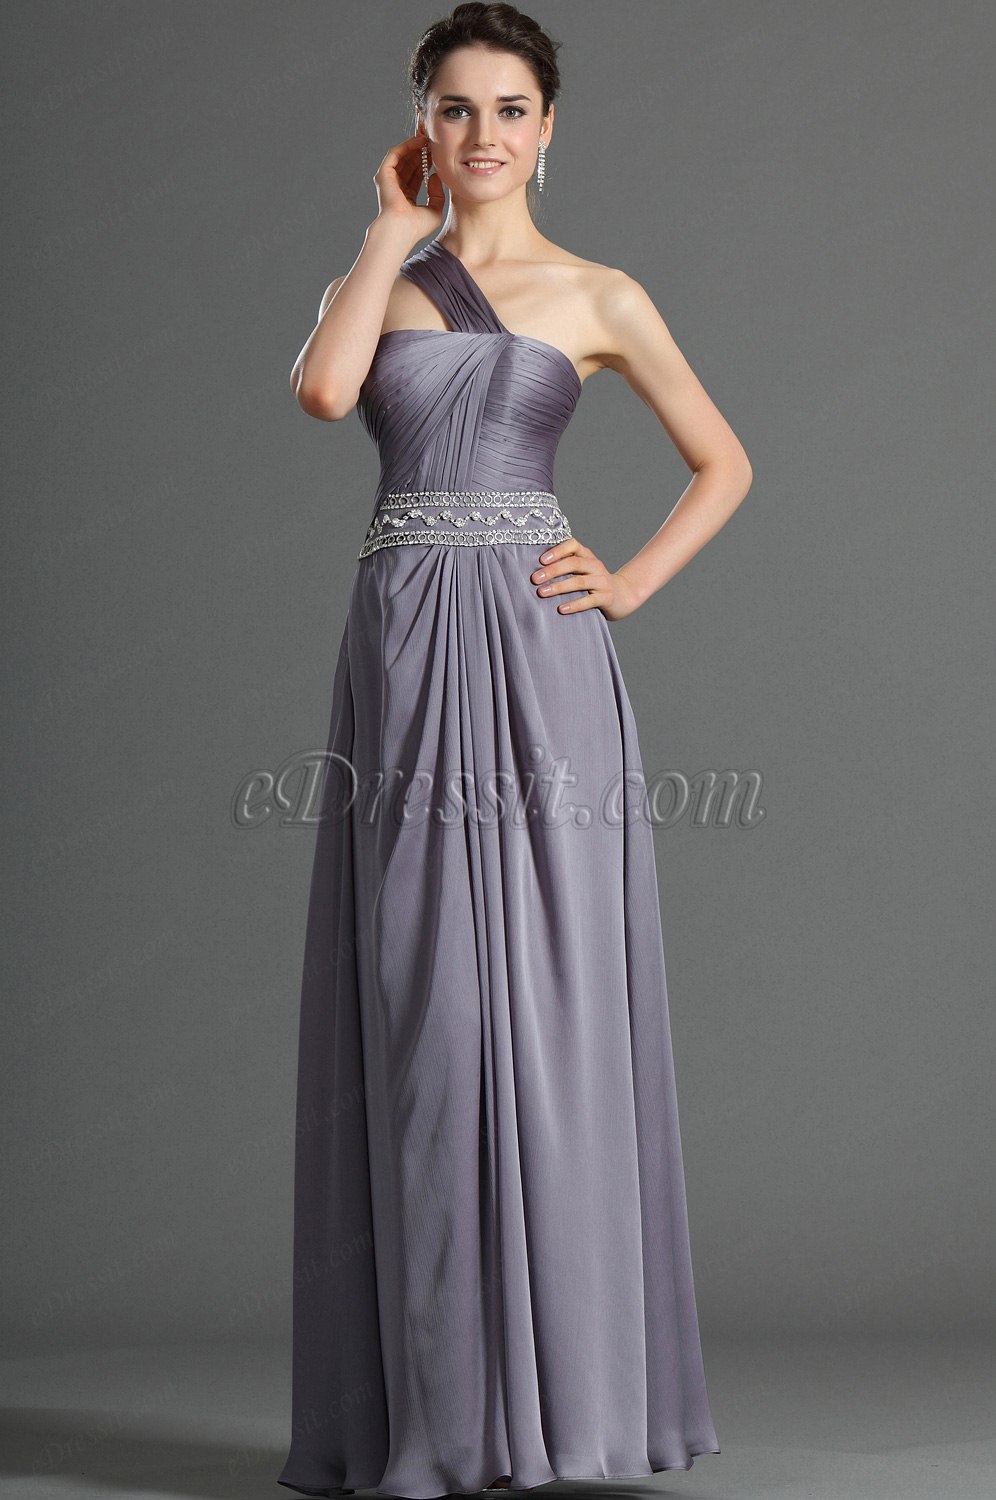 eDressit Stunning One Shoulder Evening Dress (00123306)